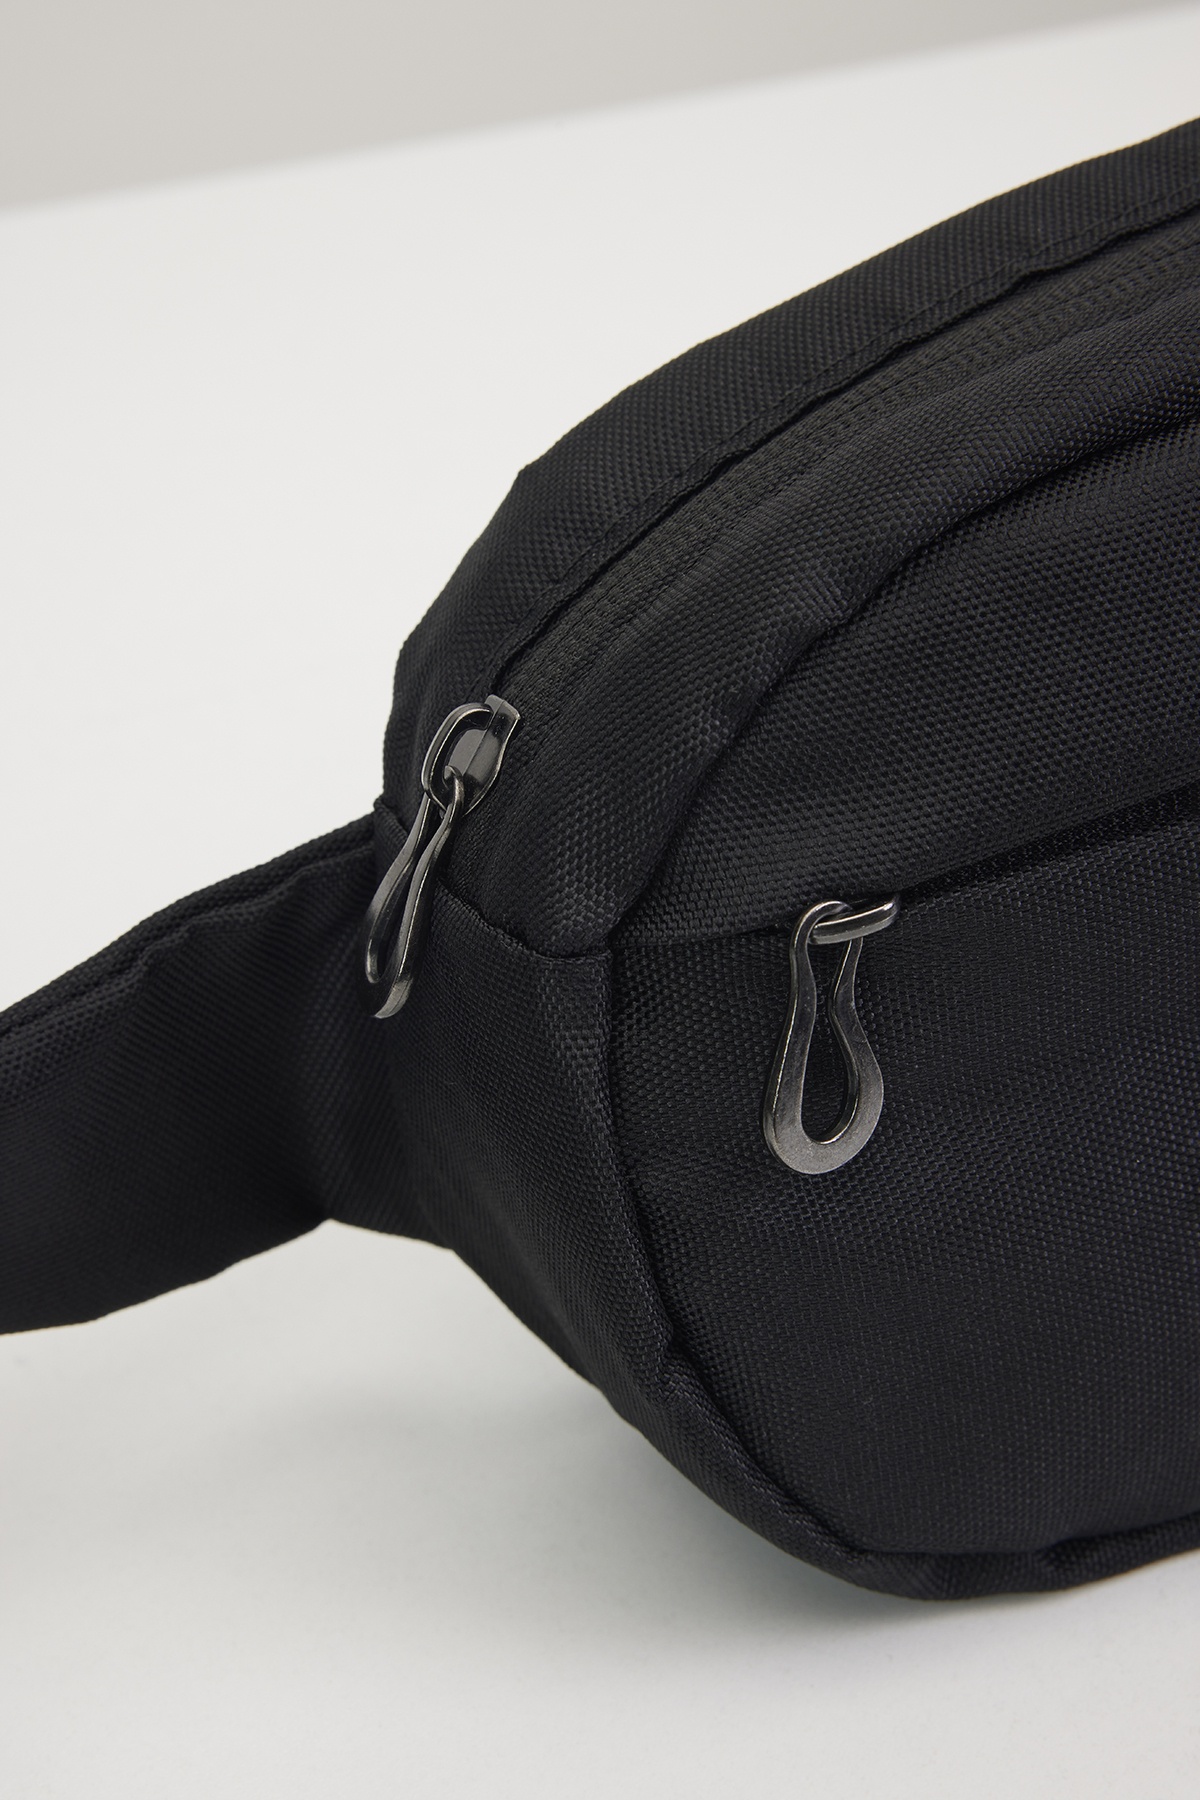 Textured Black Bag